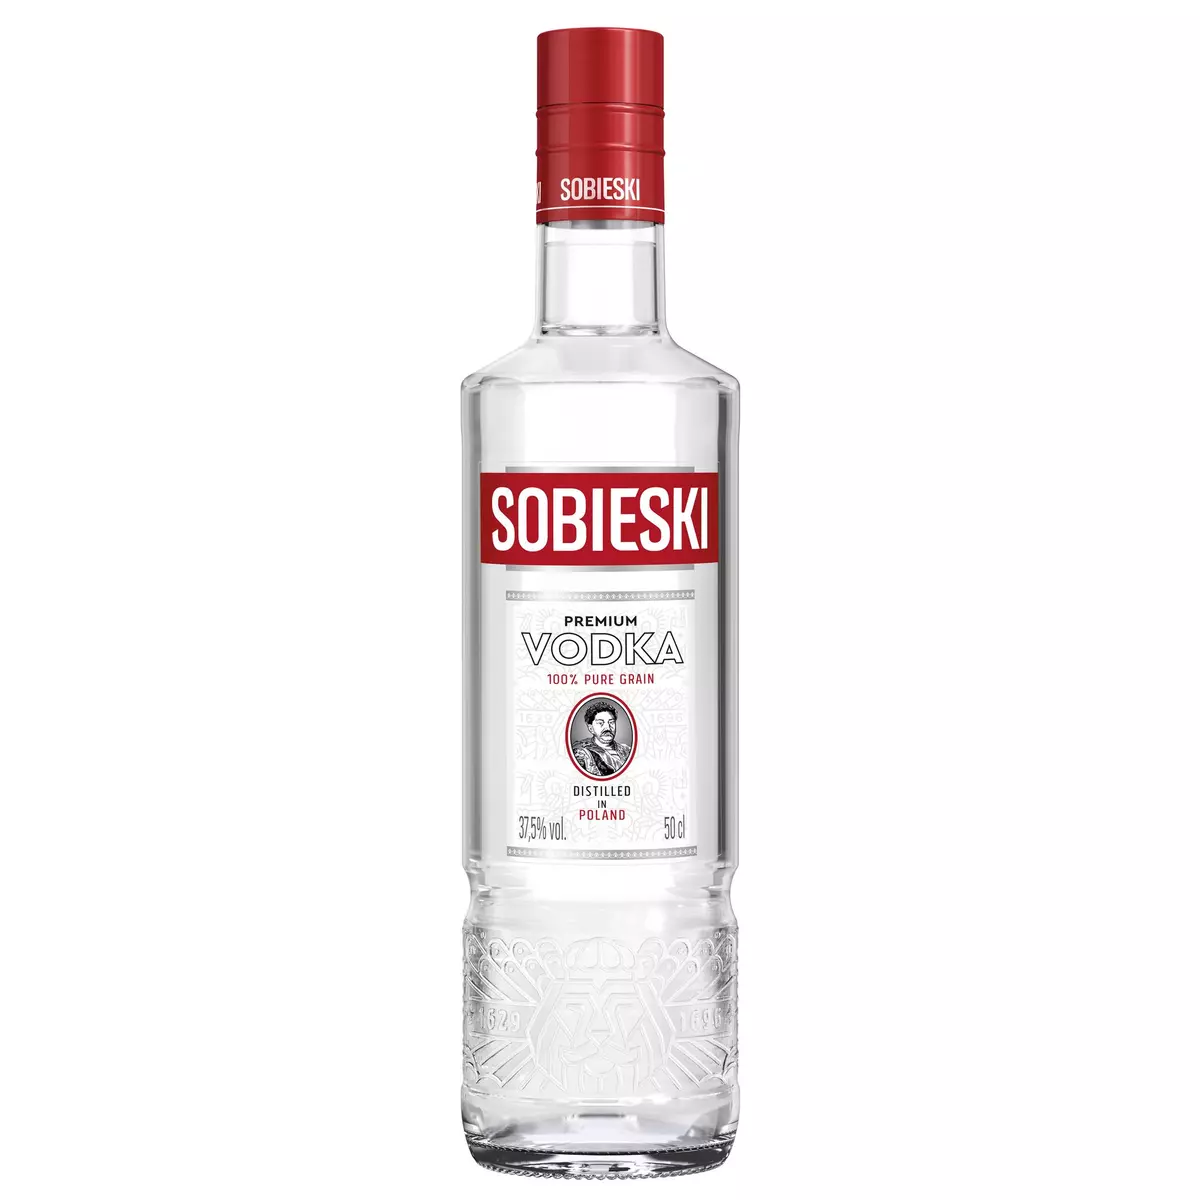 SOBIESKI Vodka polonaise 37.5% 50cl